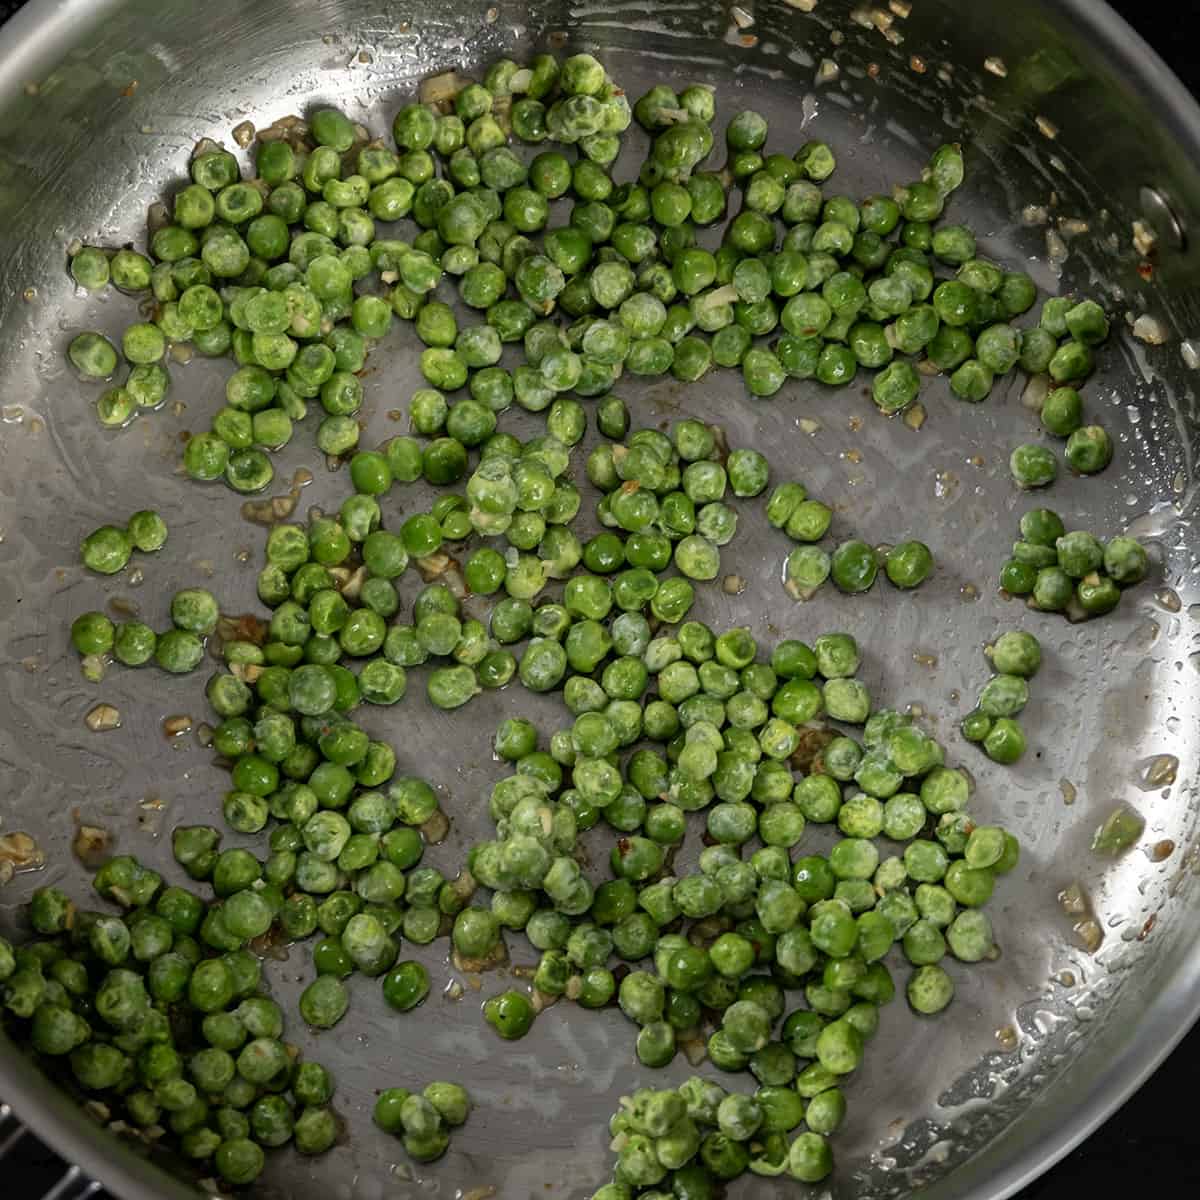 sauteing the peas